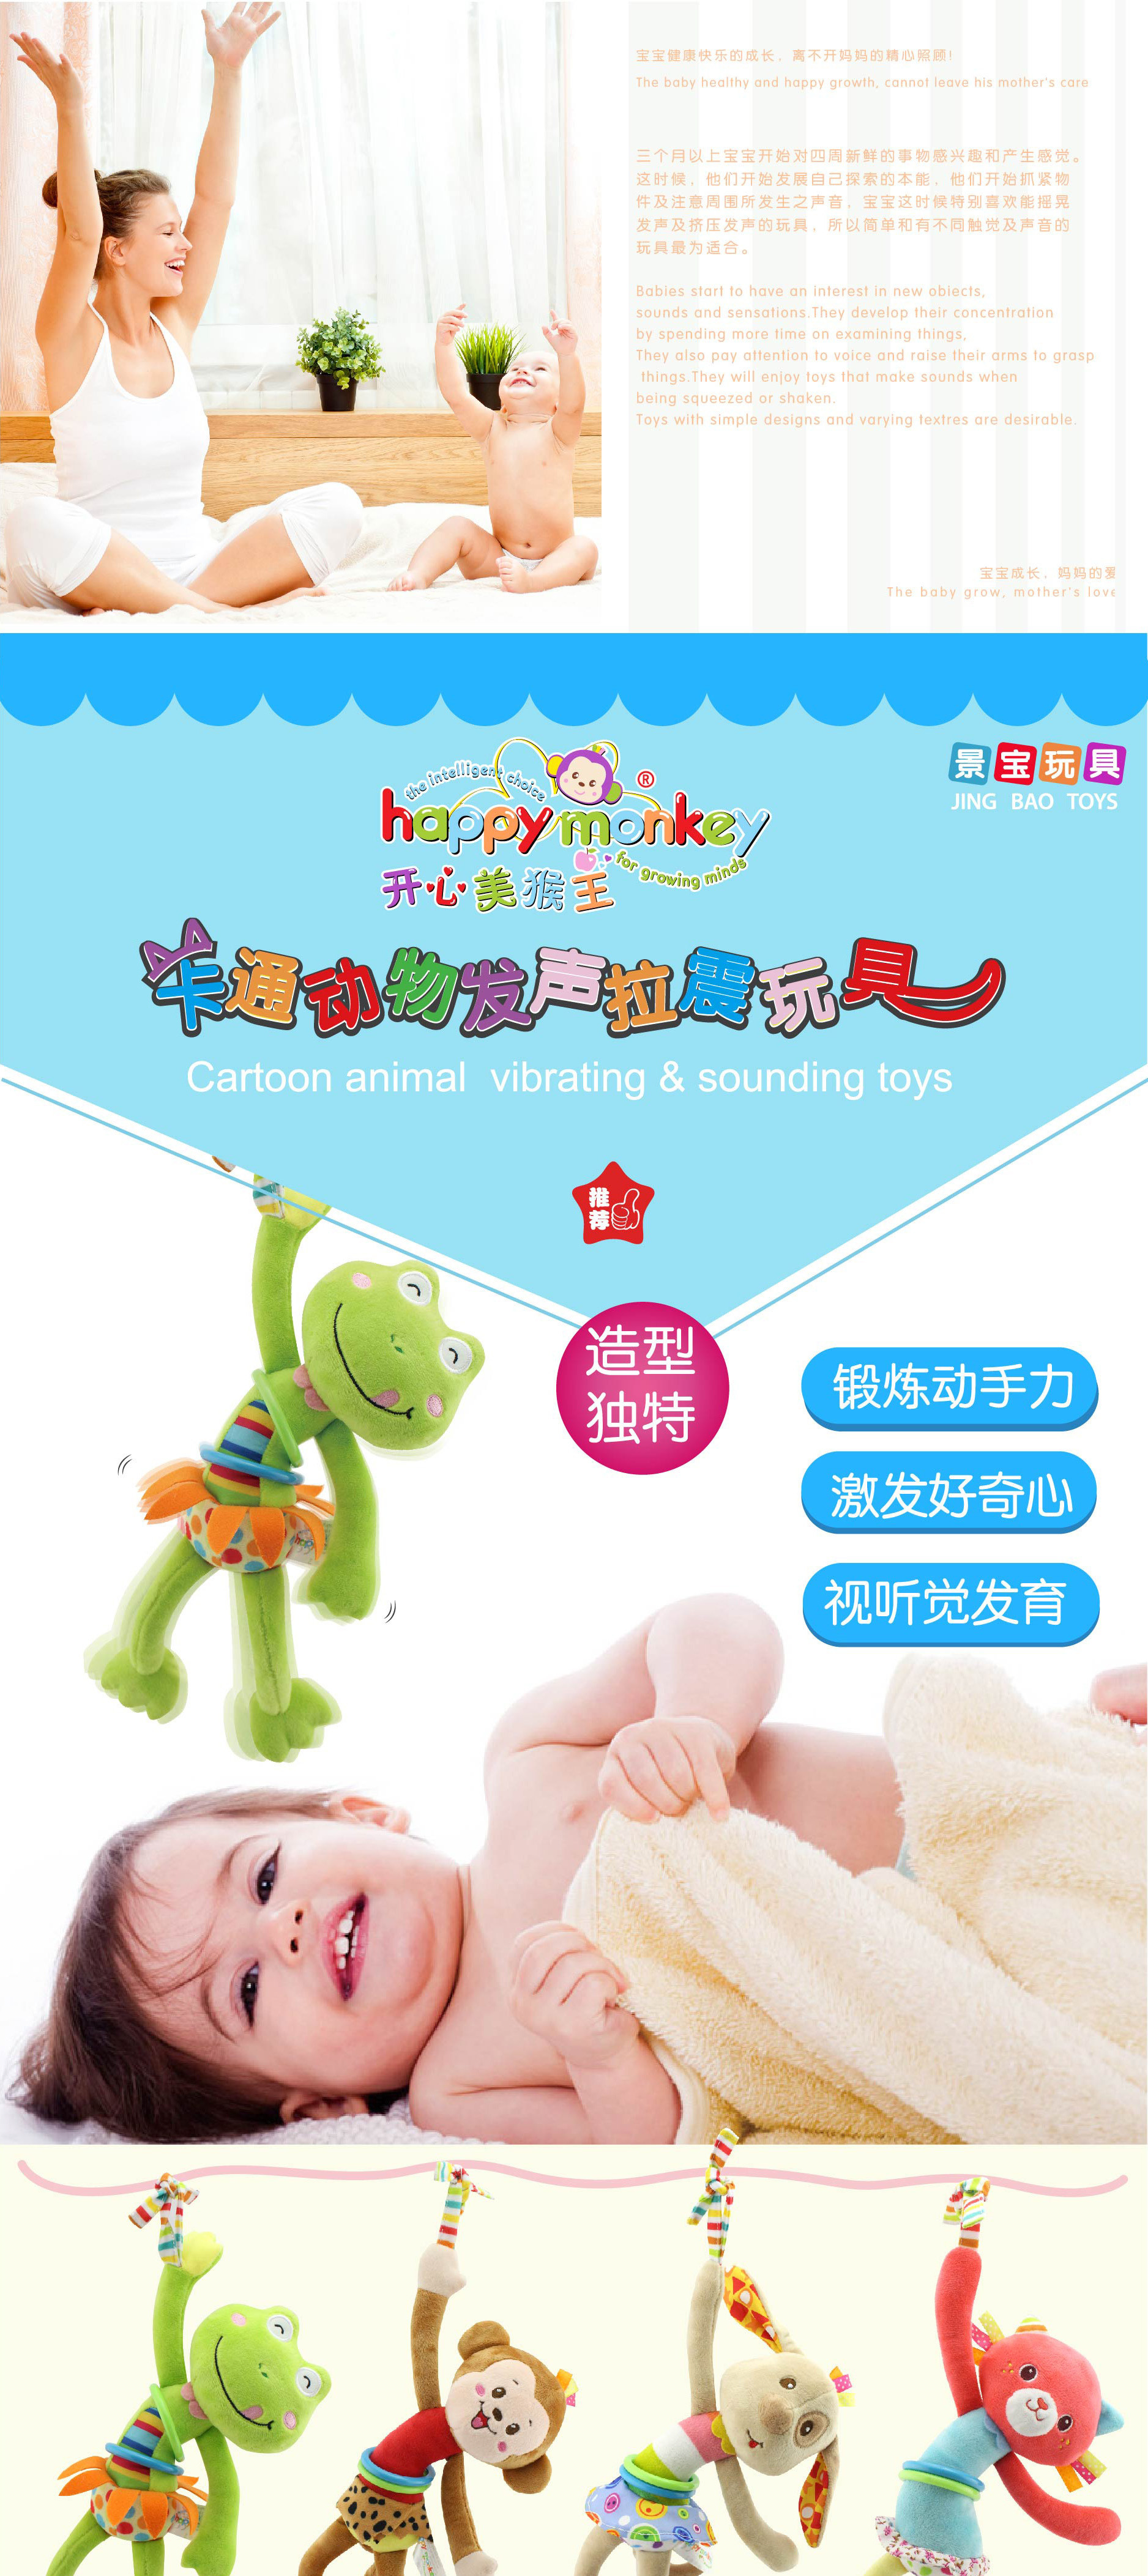 Happy Monkey车挂床挂拉震动物安抚婴儿玩具 4款拉震婴儿益智玩具示例图1